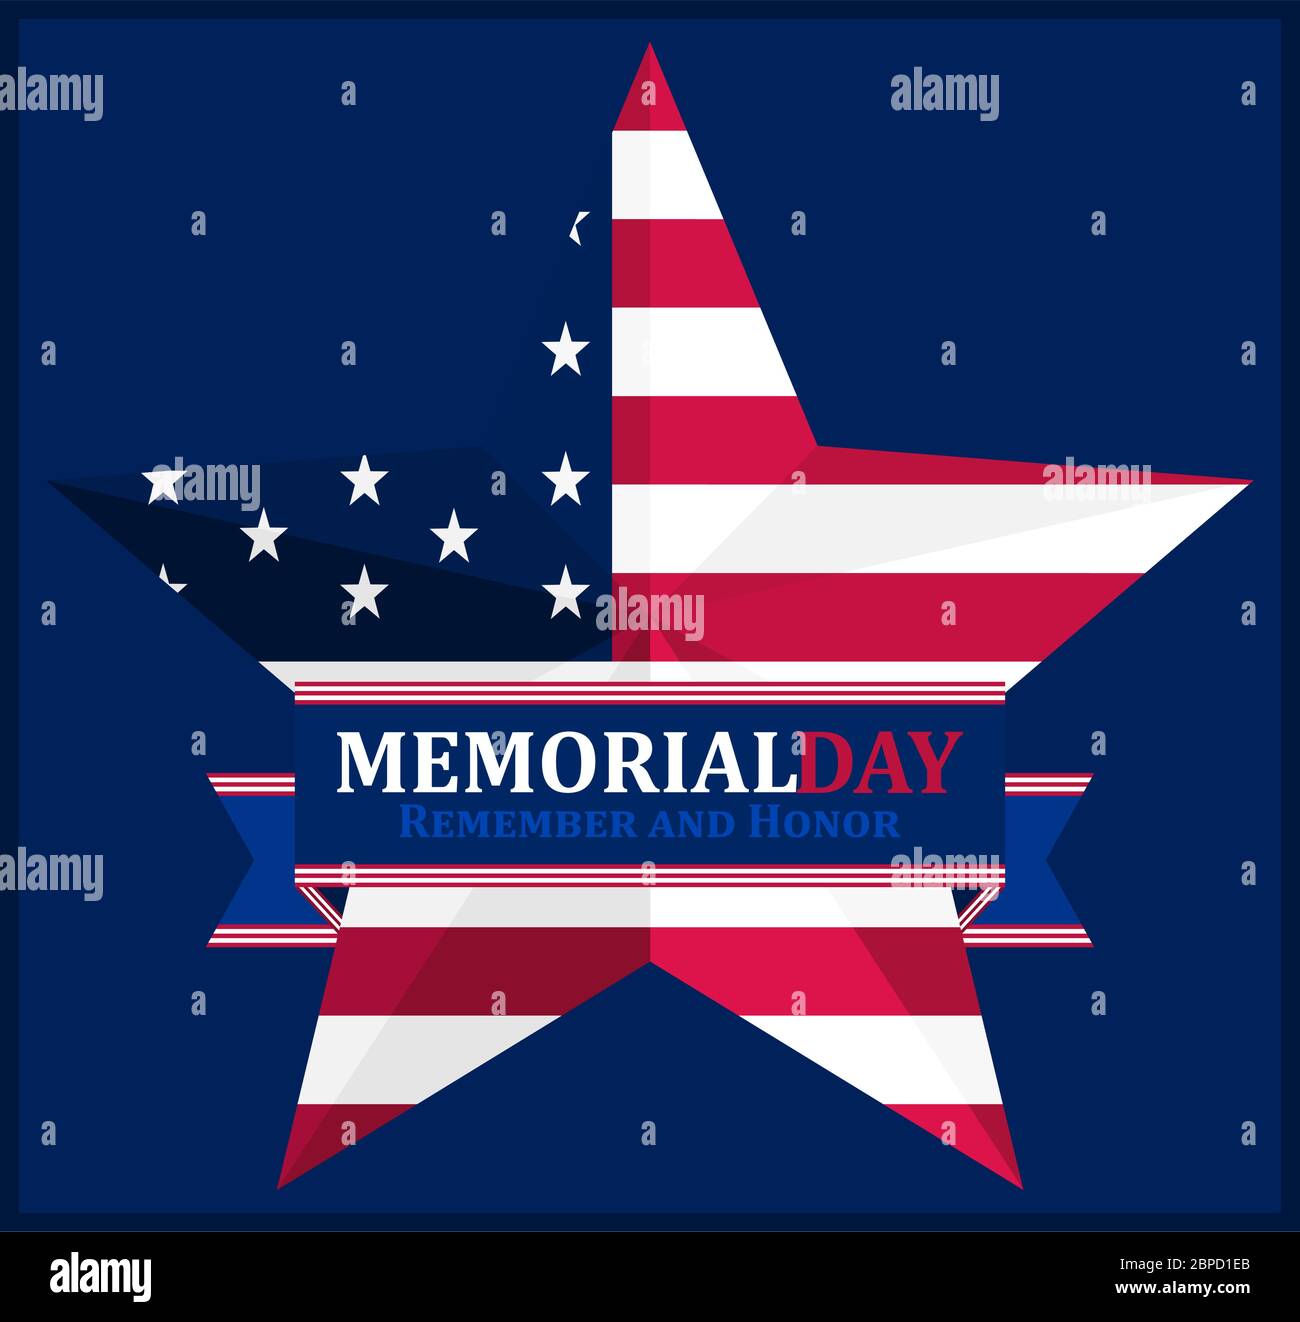 Vector illustration for US Memorial Day celebration Stock Vector Image ...